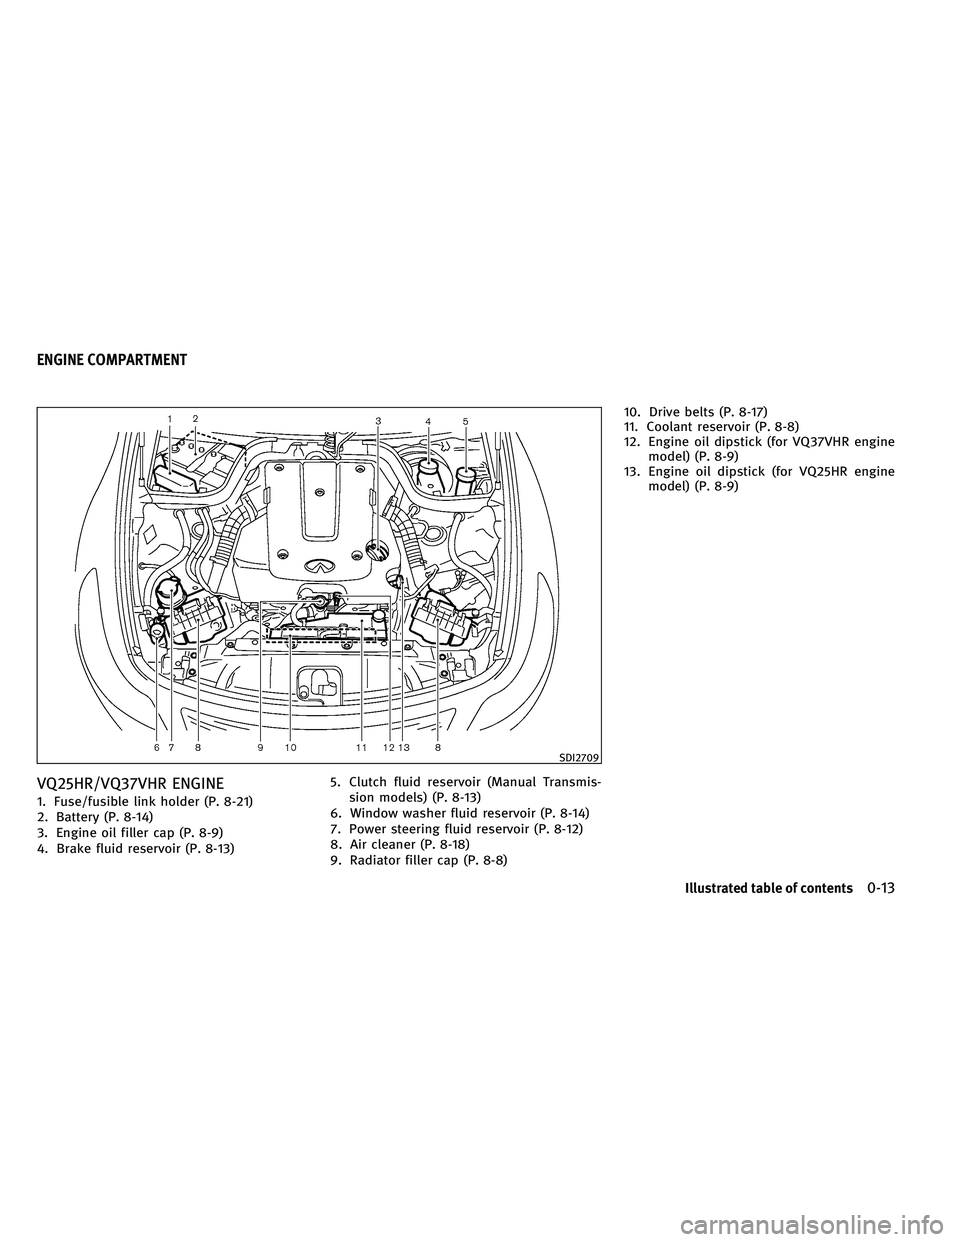 INFINITI G-COUPE 2011  Owners Manual VQ25HR/VQ37VHR ENGINE
1. Fuse/fusible link holder (P. 8-21)
2. Battery (P. 8-14)
3. Engine oil filler cap (P. 8-9)
4. Brake fluid reservoir (P. 8-13)5. Clutch fluid reservoir (Manual Transmis-
sion mo